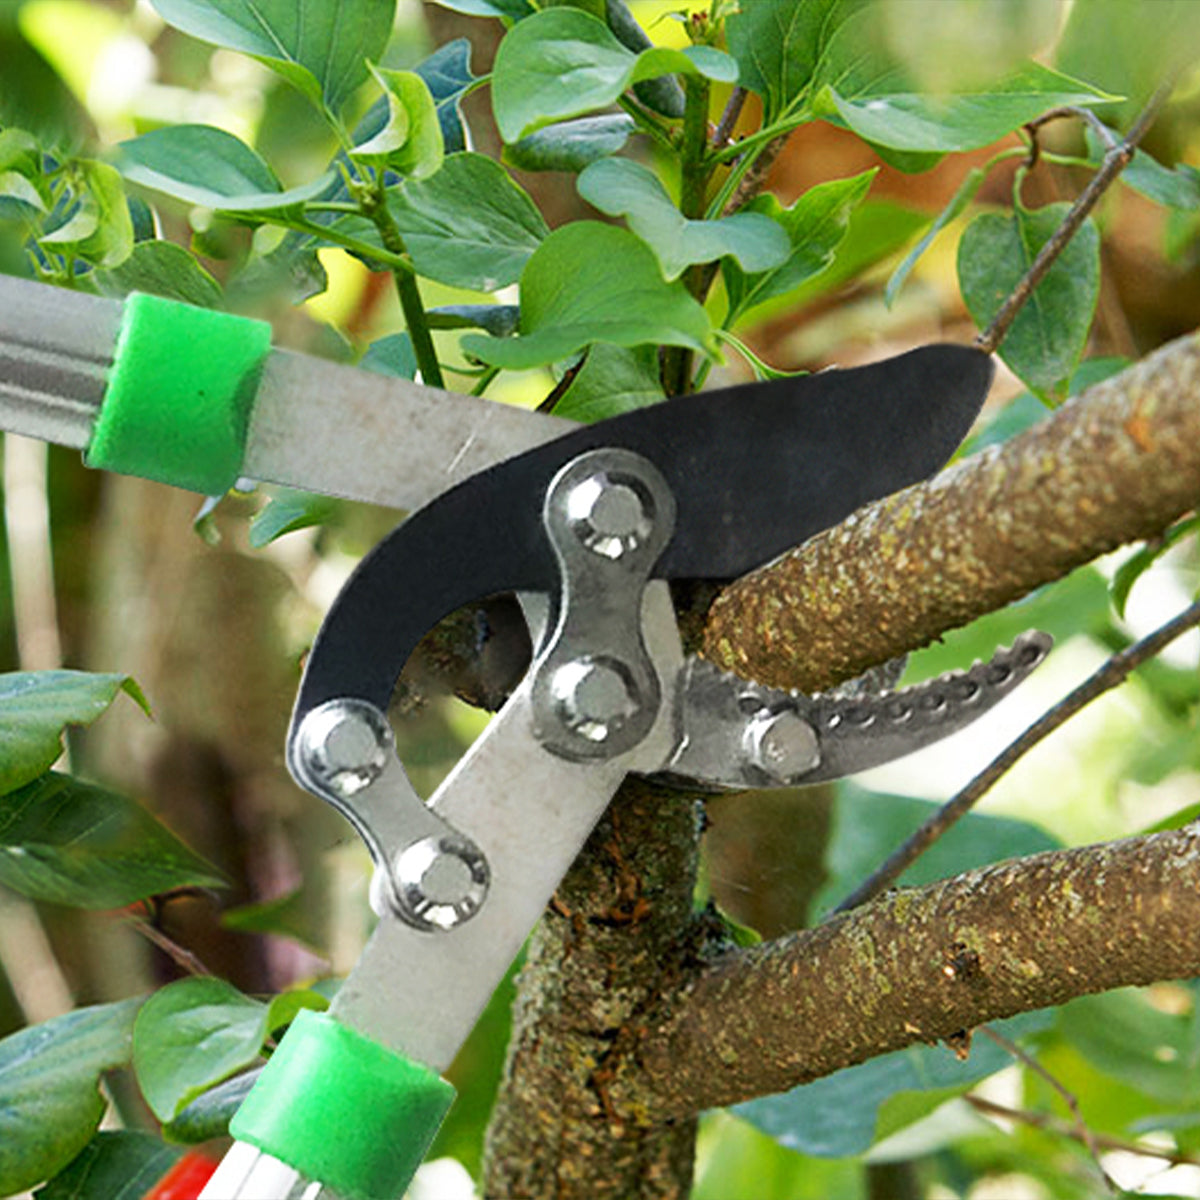 Handheld garden pruning shears high carbon steel pruning shears gardening  plant shears branch shears